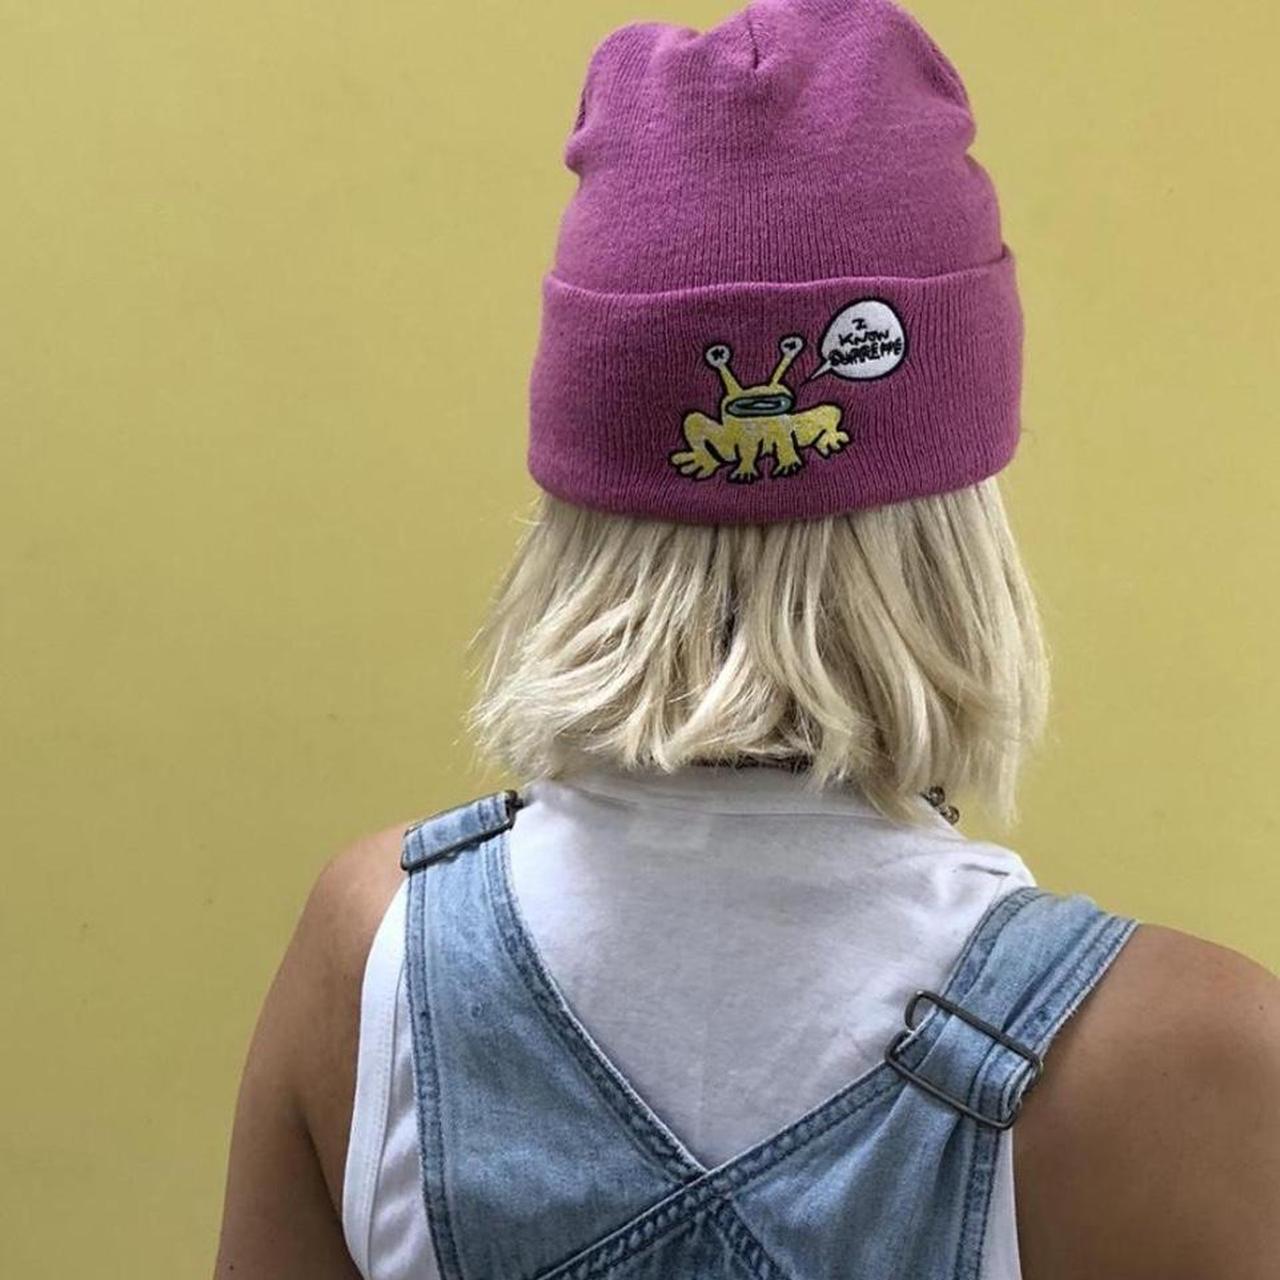 supreme hat beanie pink Daniel Johnston frog - Depop